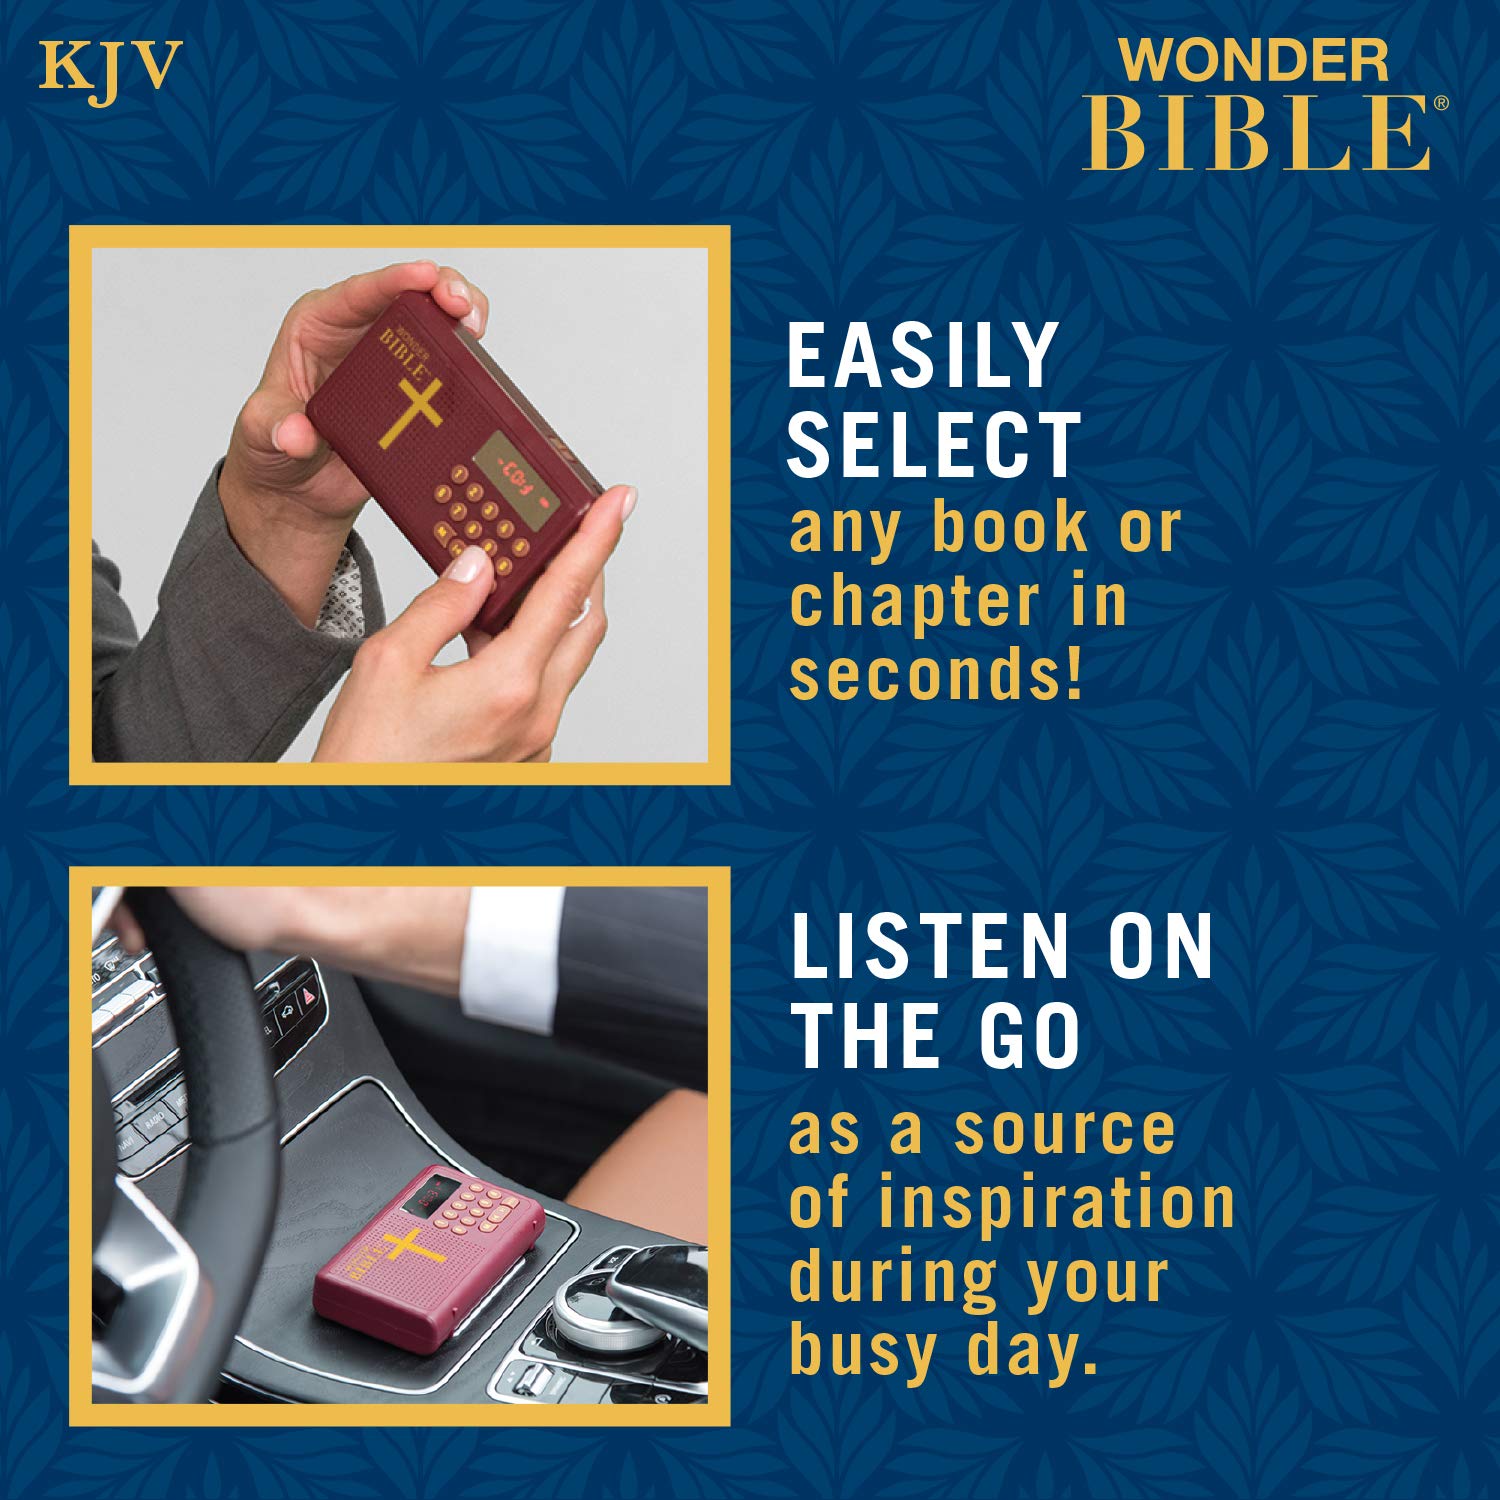 Wonder Bible KJV- The Talking Audio Bible Player (King James Version) New & Old Testament, As Seen on TV